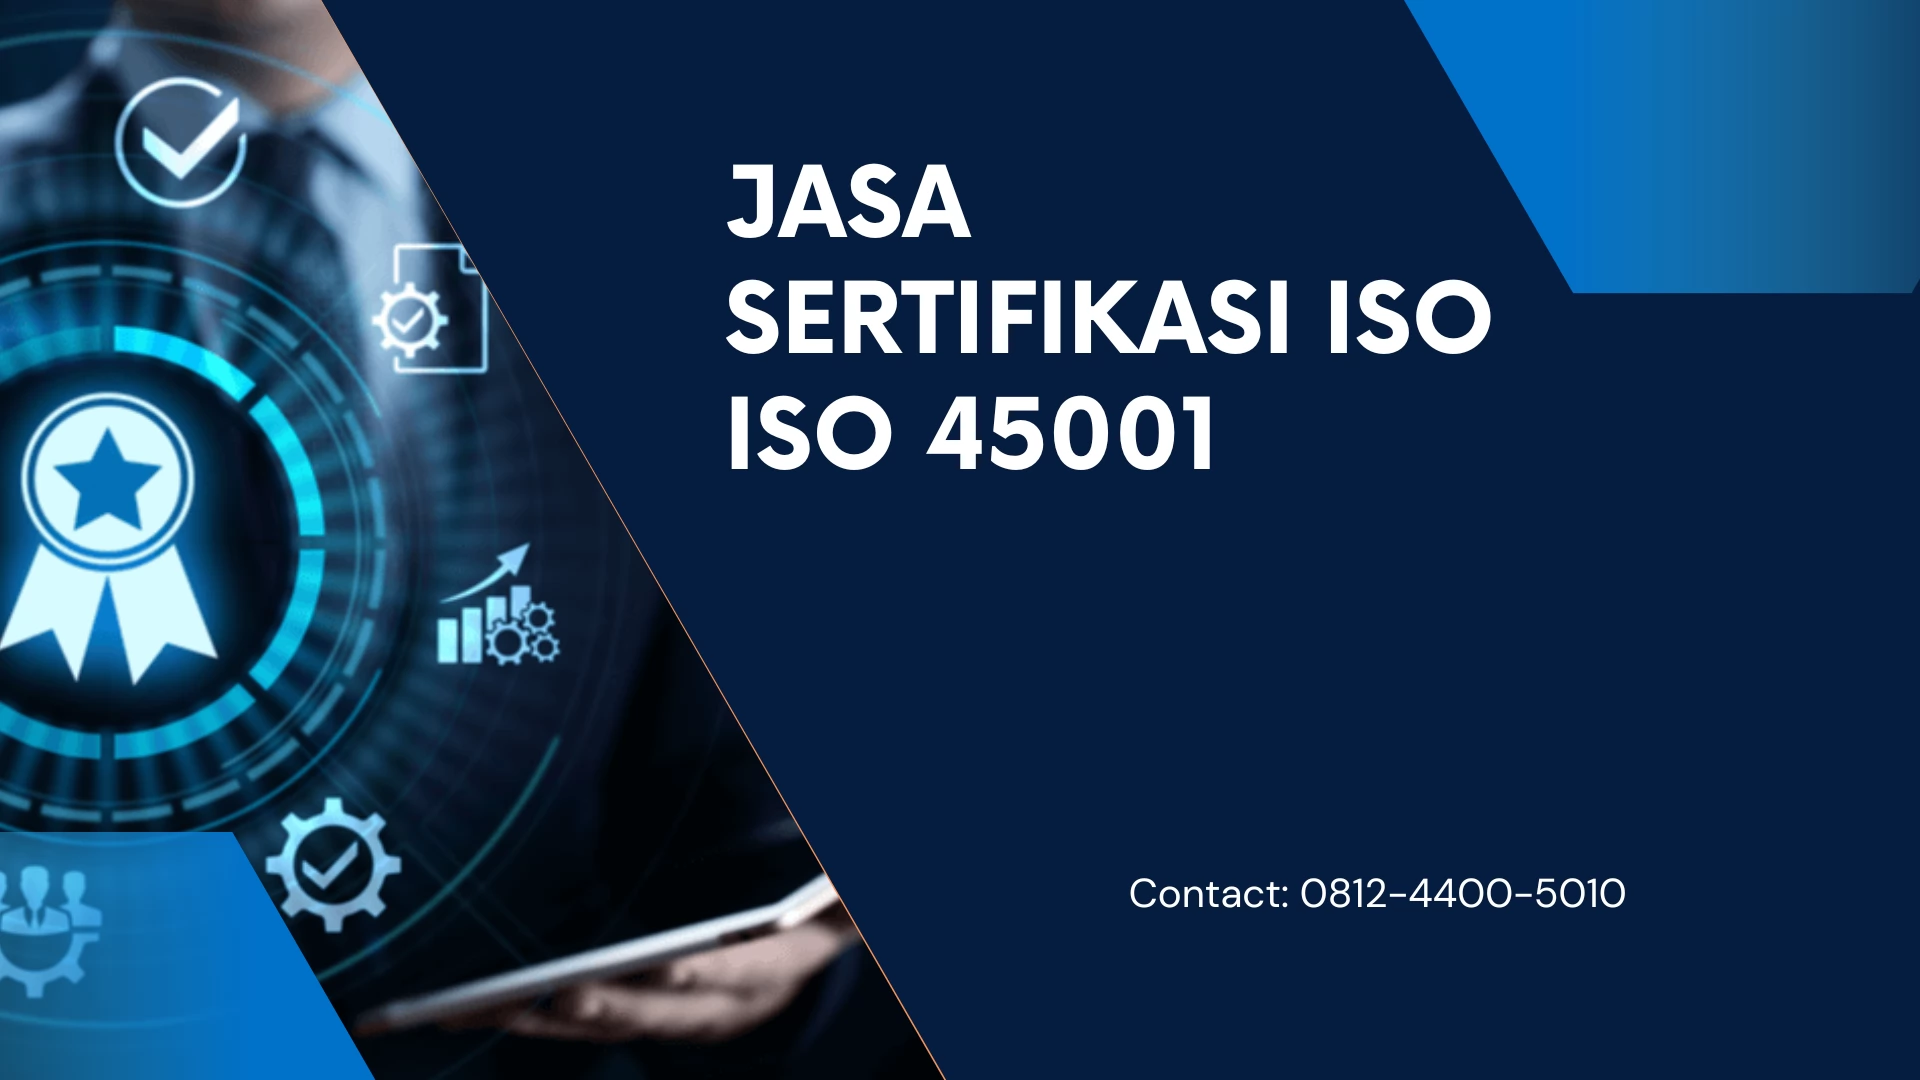 Jasa Sertifikasi ISO ISO 45001